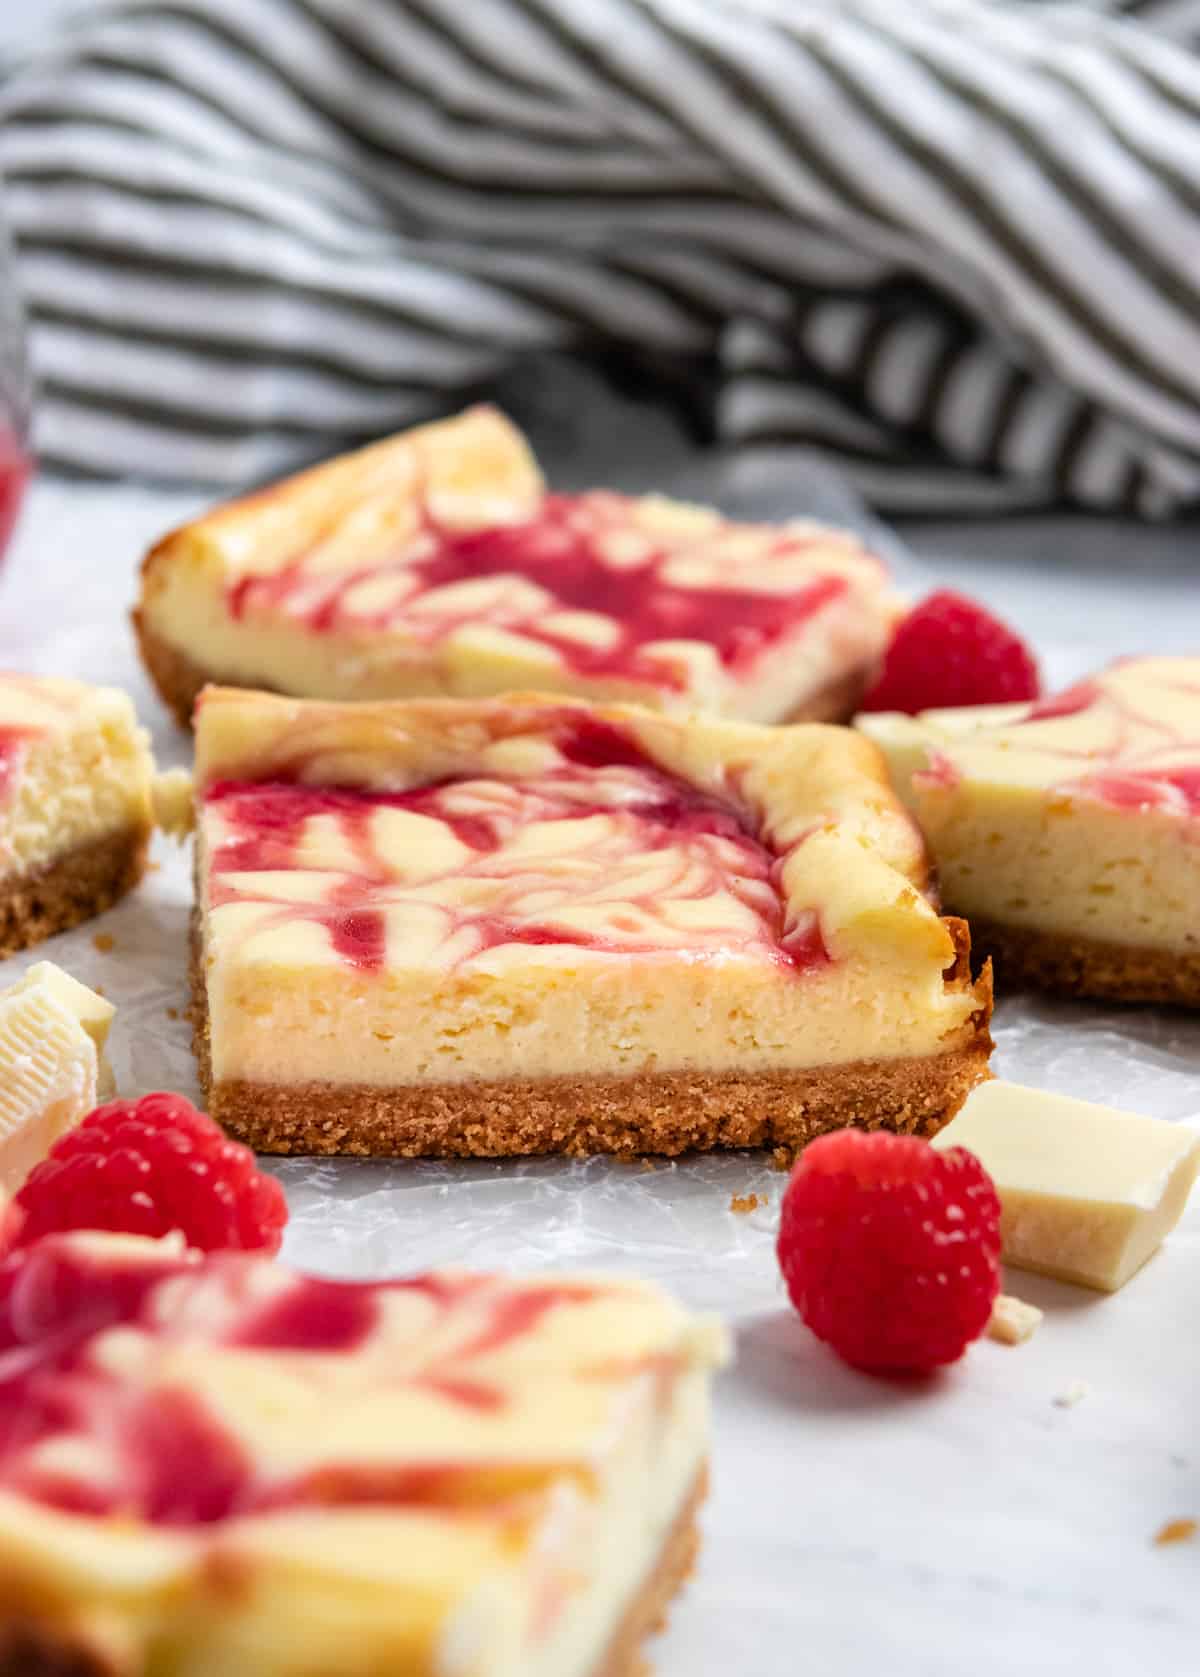 Raspberry white chocolate cheesecake bars on wax paper with fresh raspberries/